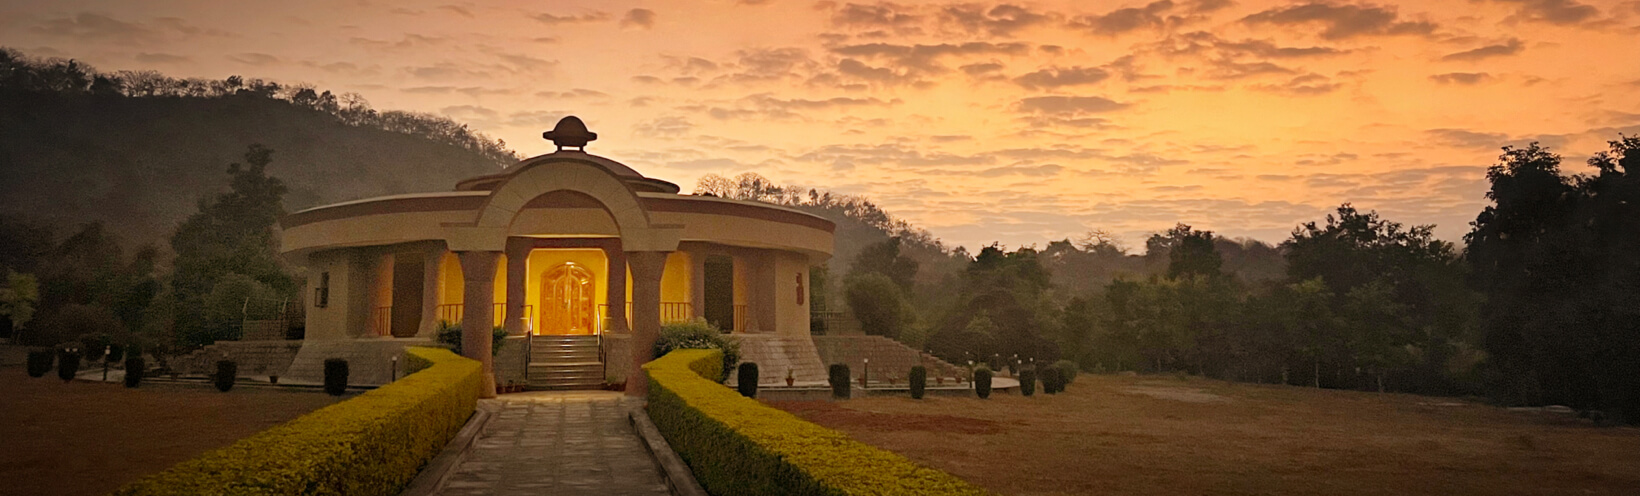 khjaurho shrine sunset lighter banner - Himalayan Institute